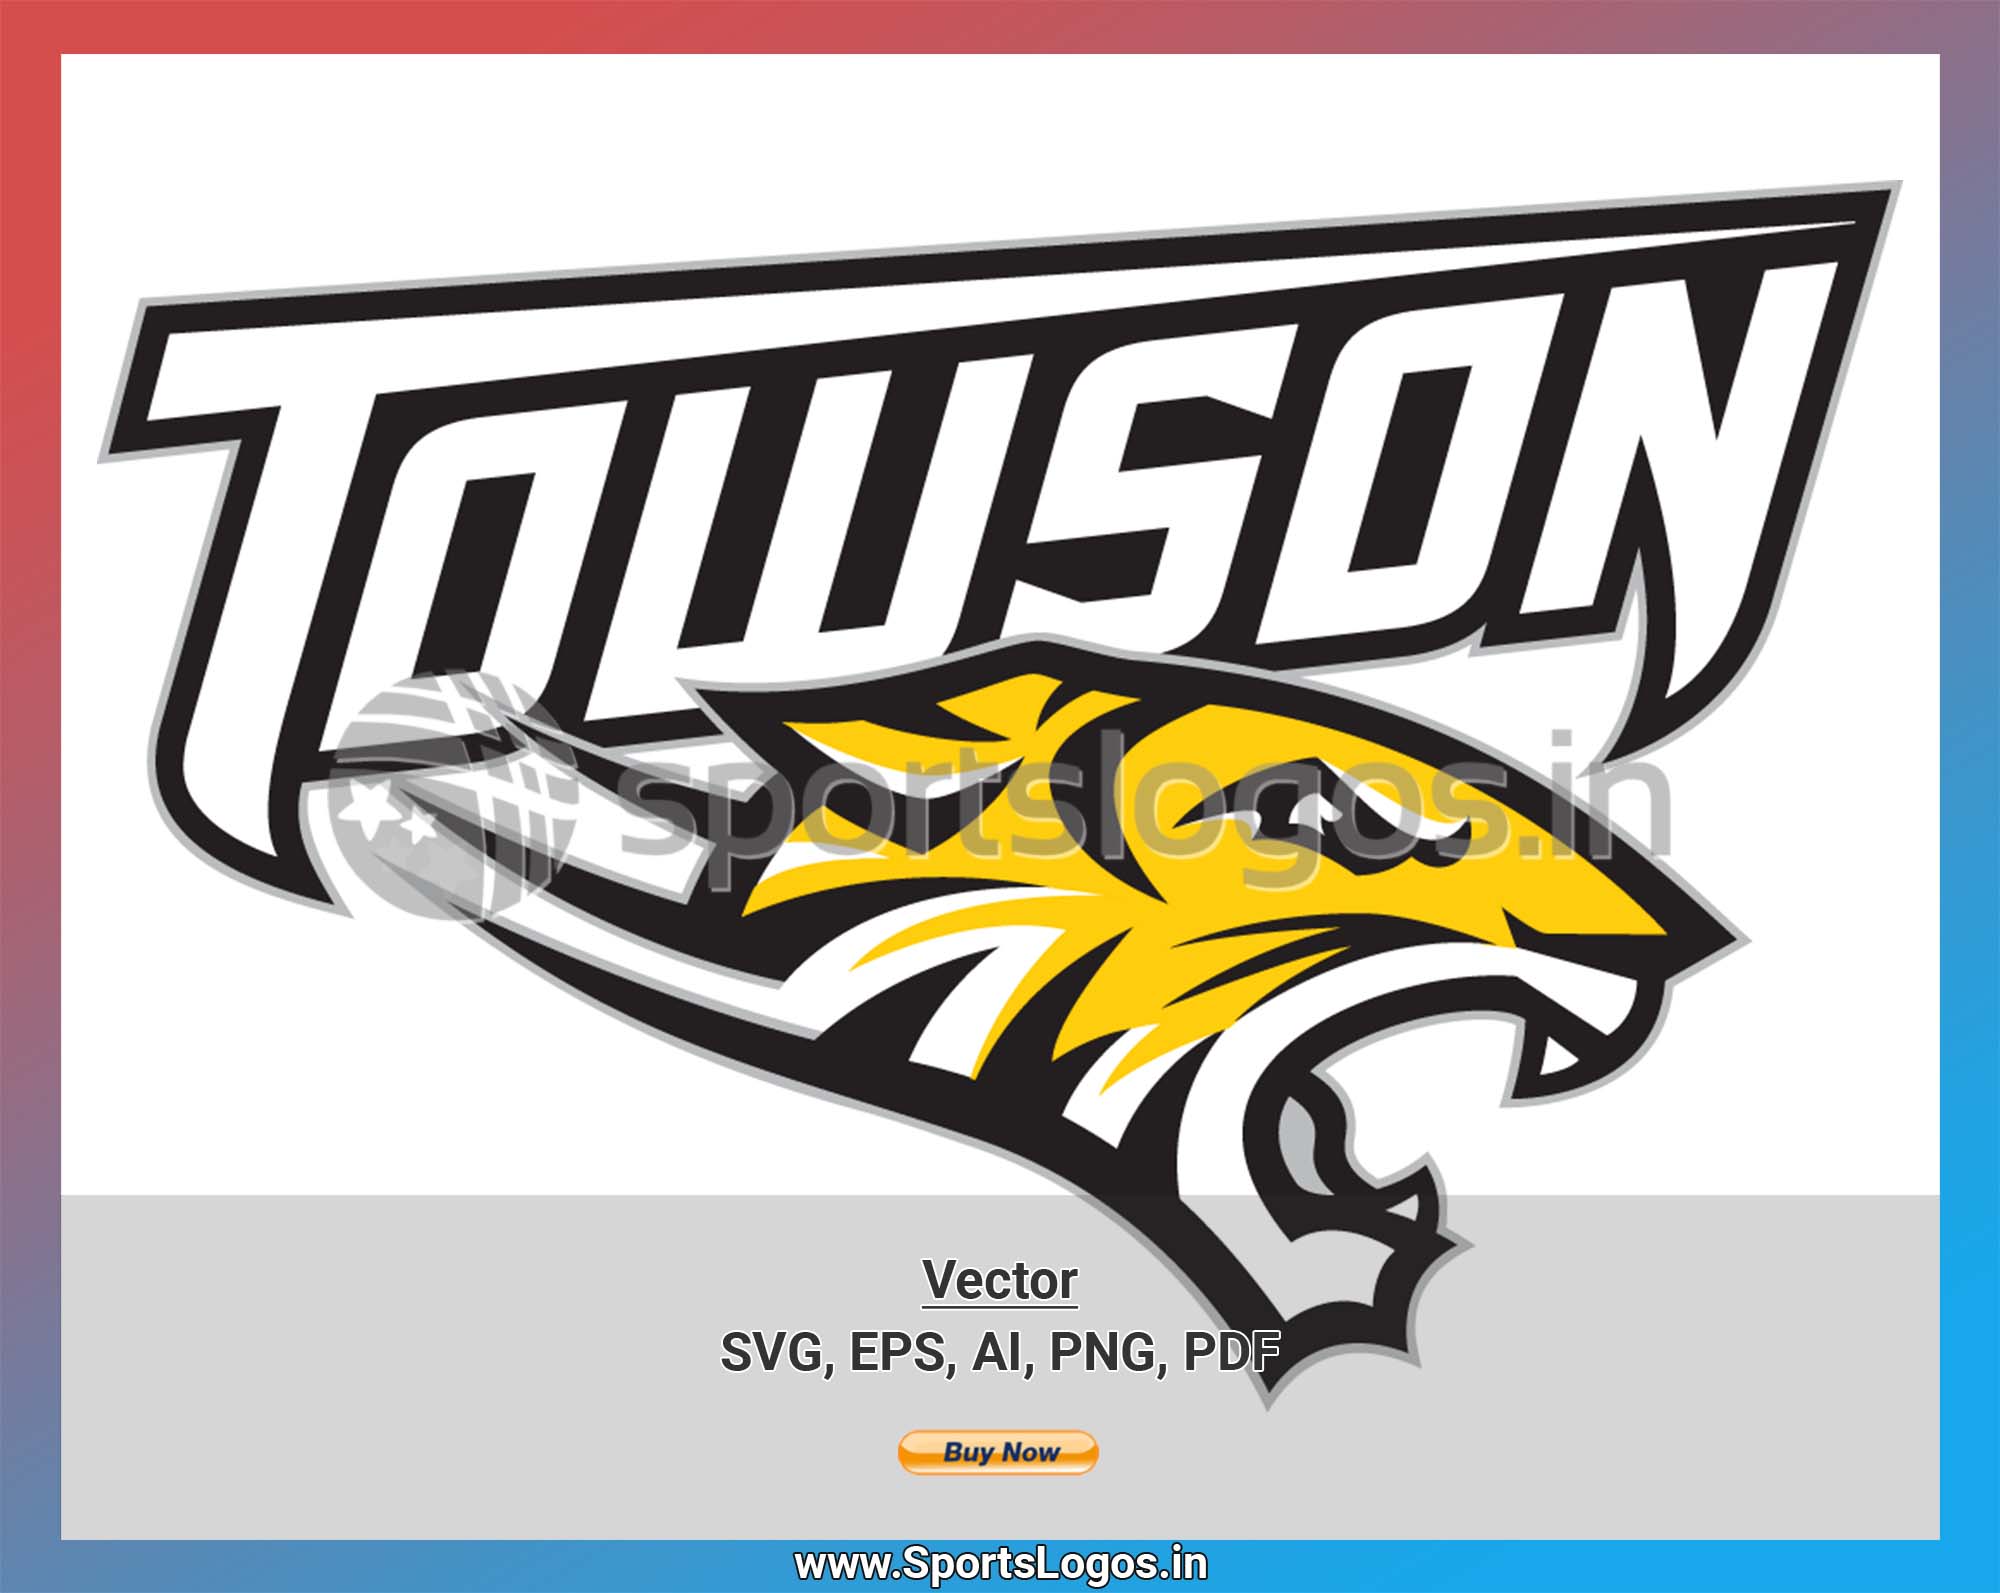 Towson Tigers Logo mug